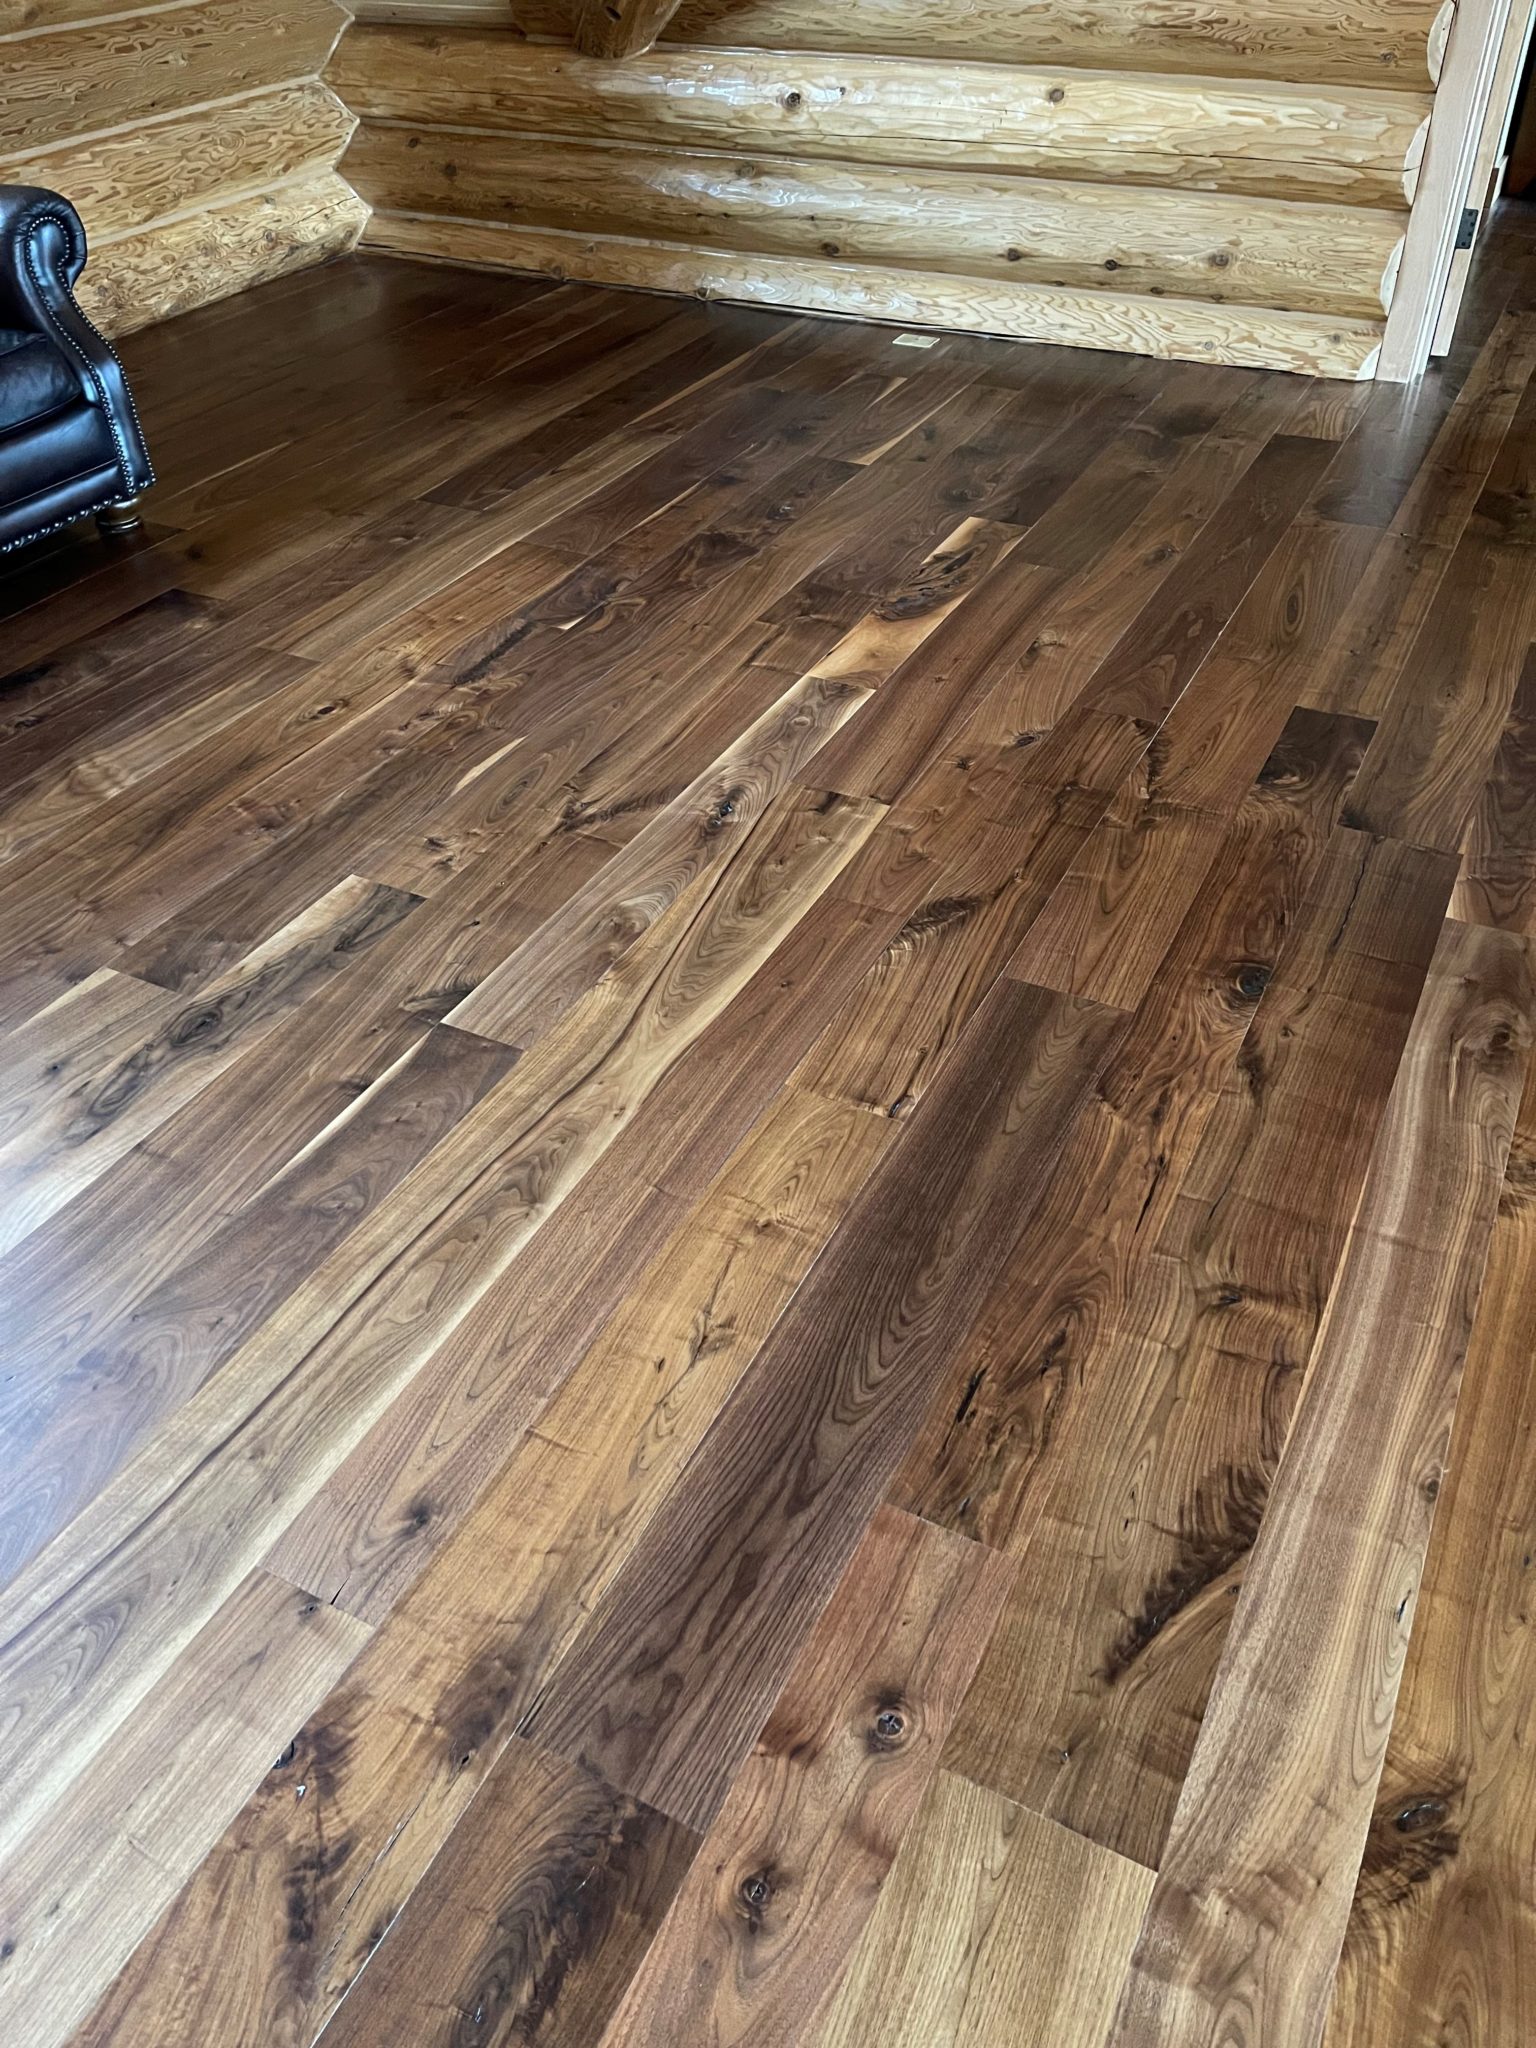 walnut flooring installed in house